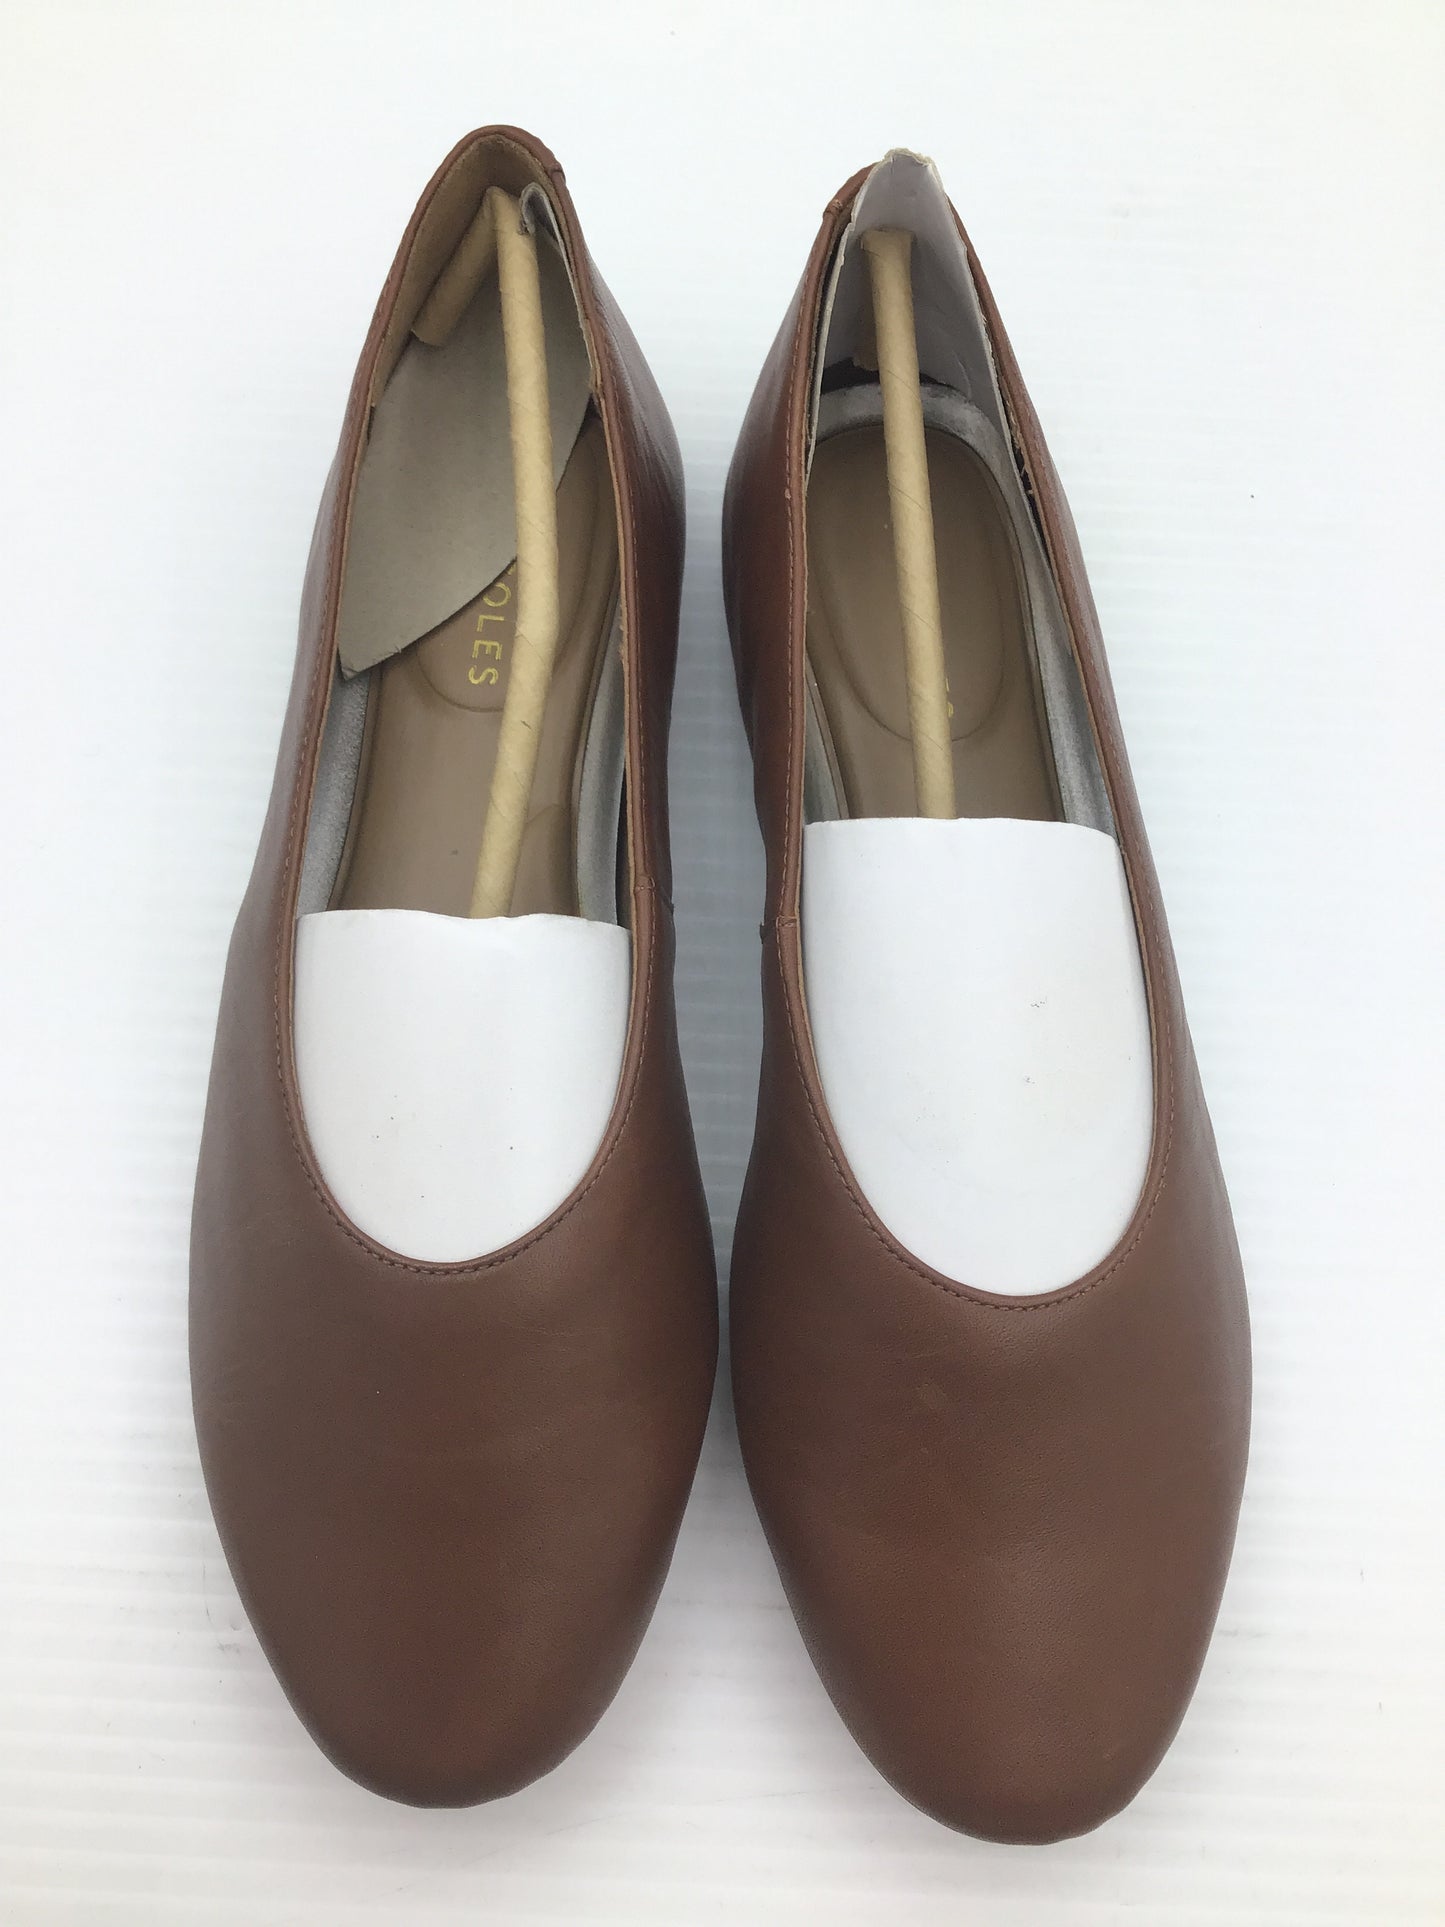 Shoes Flats Ballet By Aerosoles  Size: 7.5